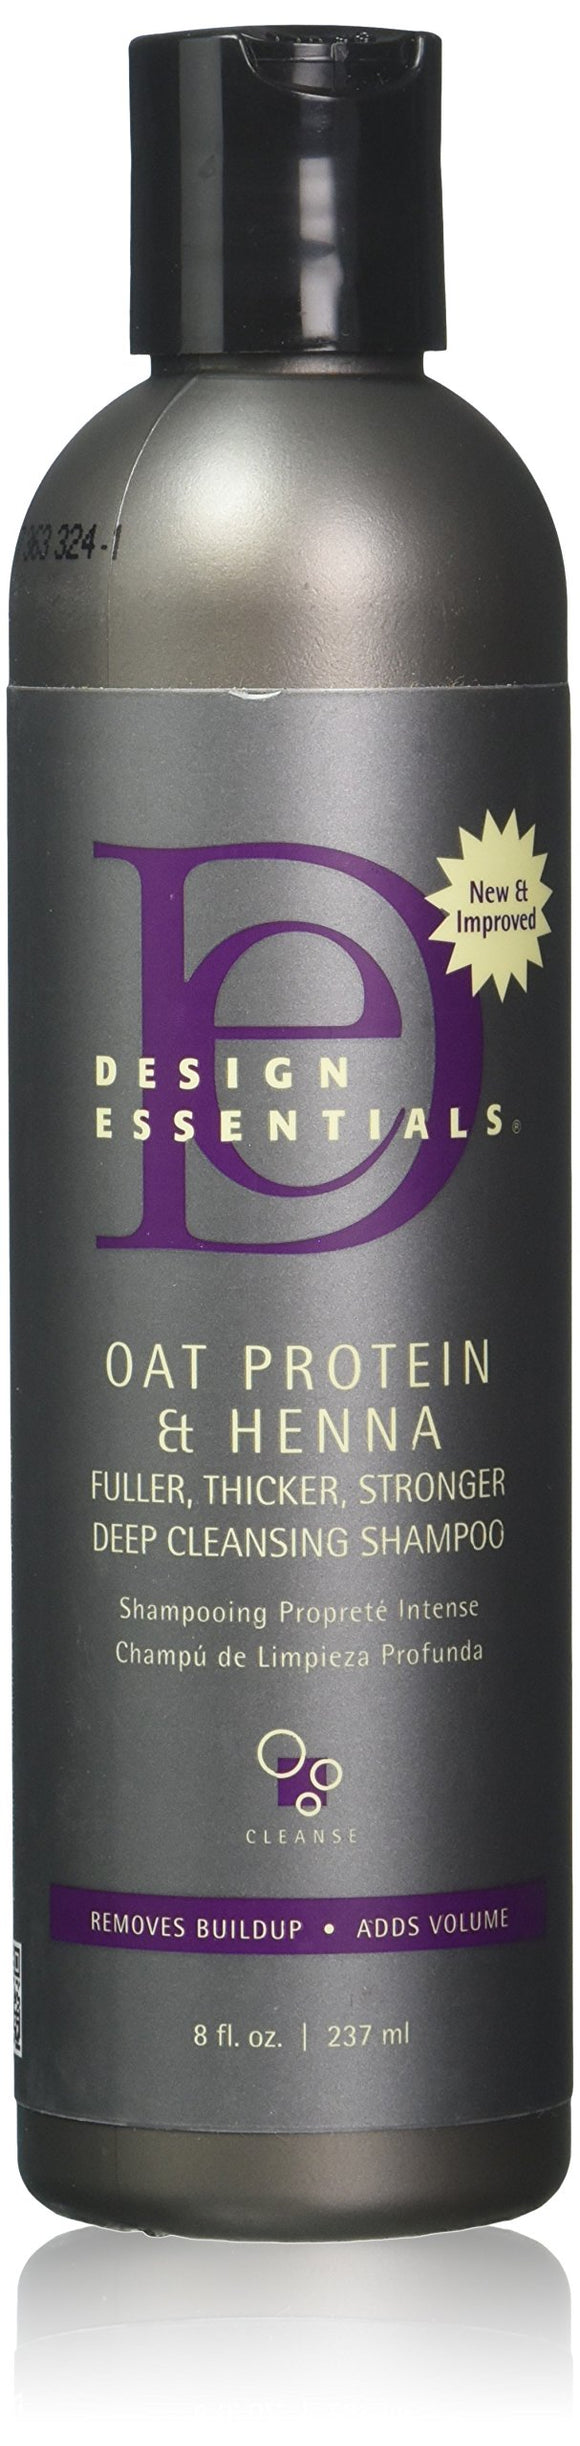 Design Essentials Oat Protein & Henna Deep Cleansing Shampoo For Fuller, Thicker, Stronger, Longer Hair - 8 Oz - Beauty Fleet